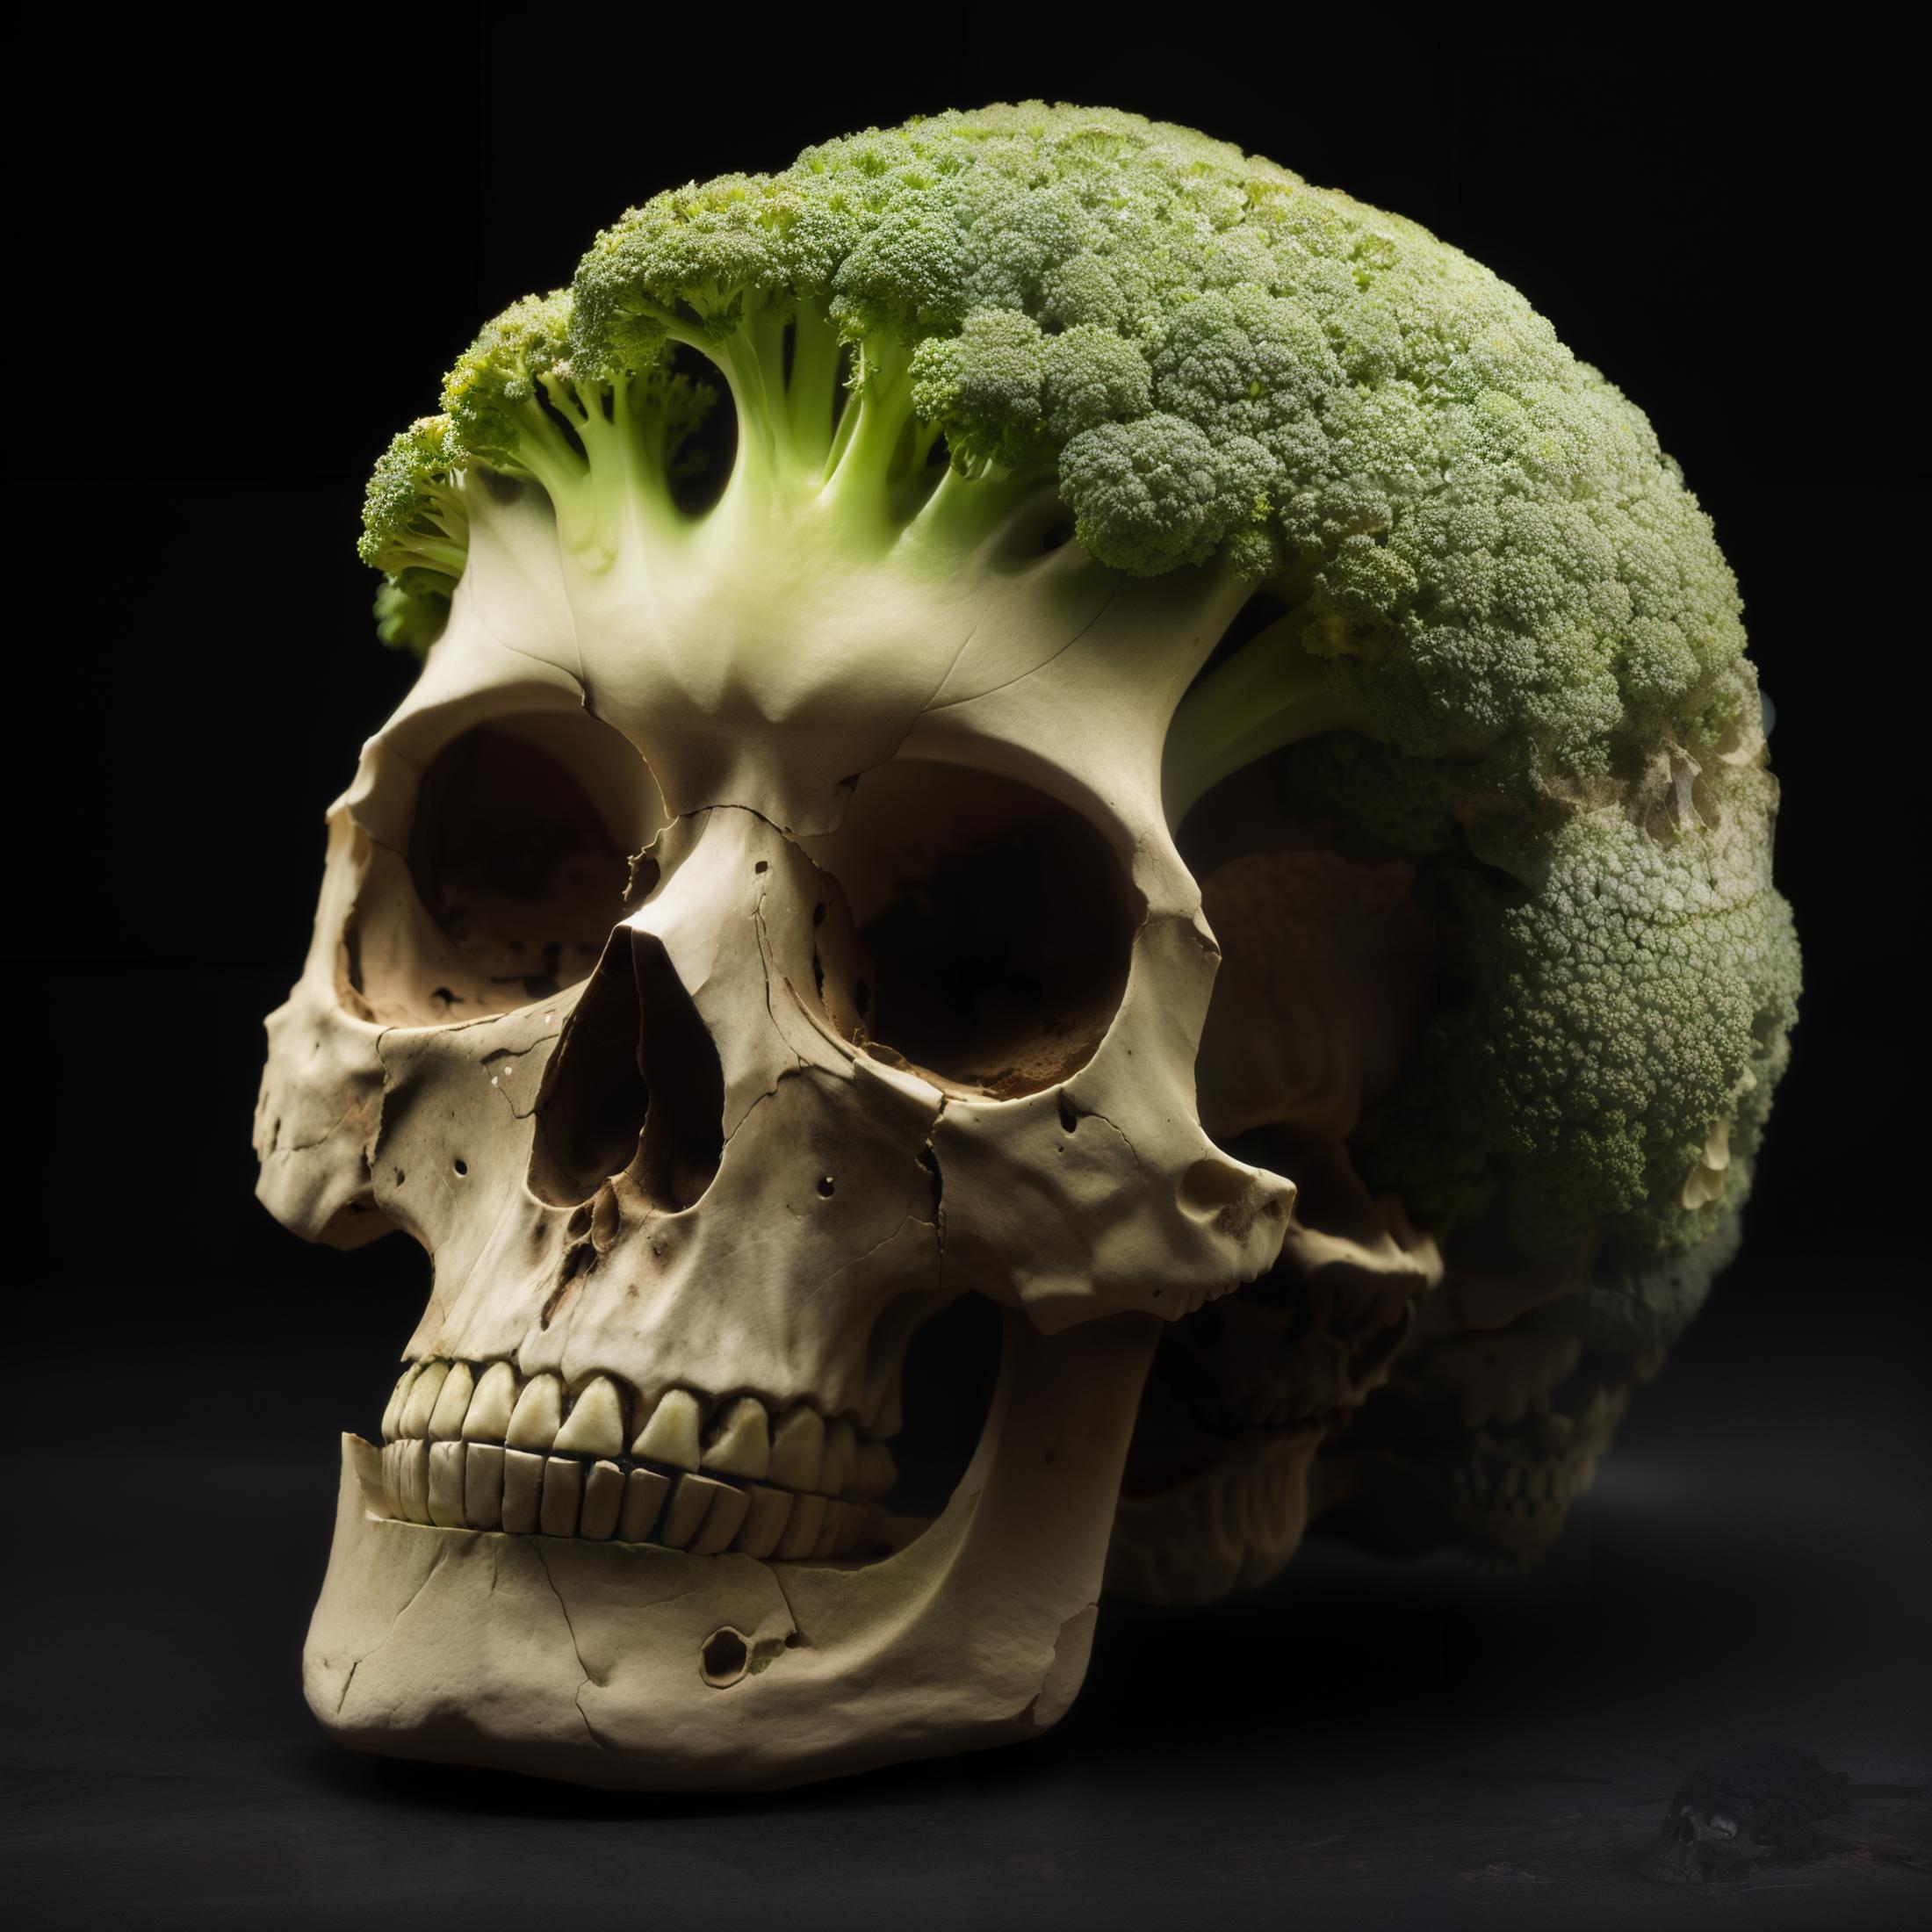 A skull with a broccoli headpiece